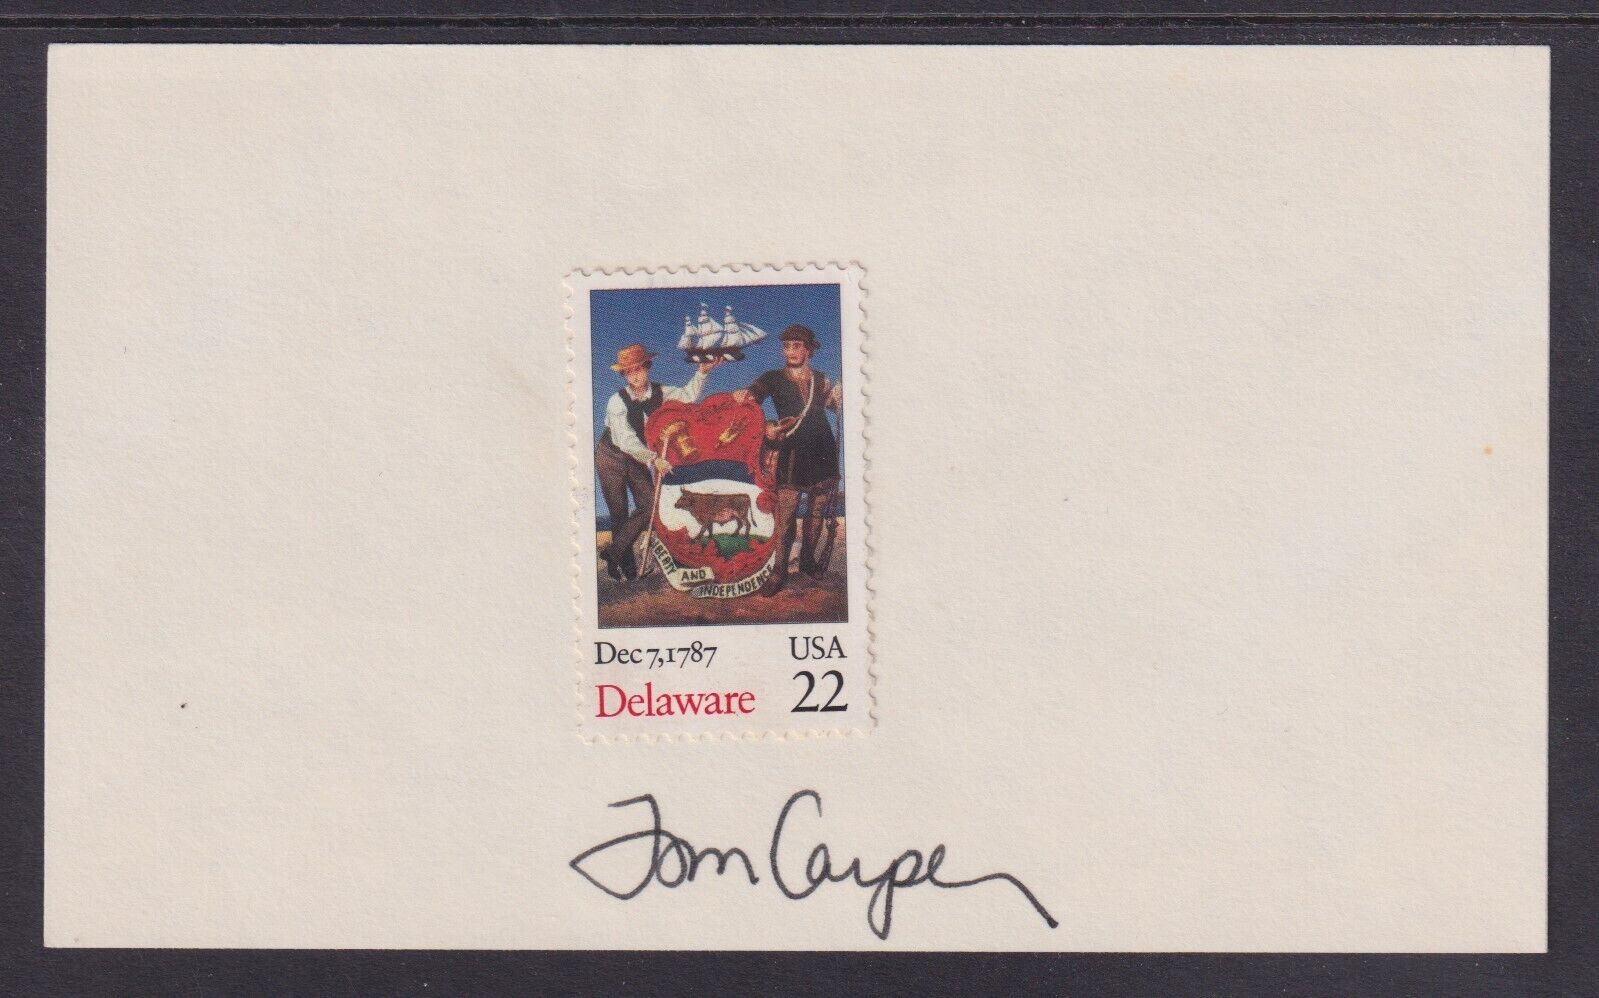 Tom Carper (1947-), US Senator, Delaware Governor, signed 3x5 card with DE stamp